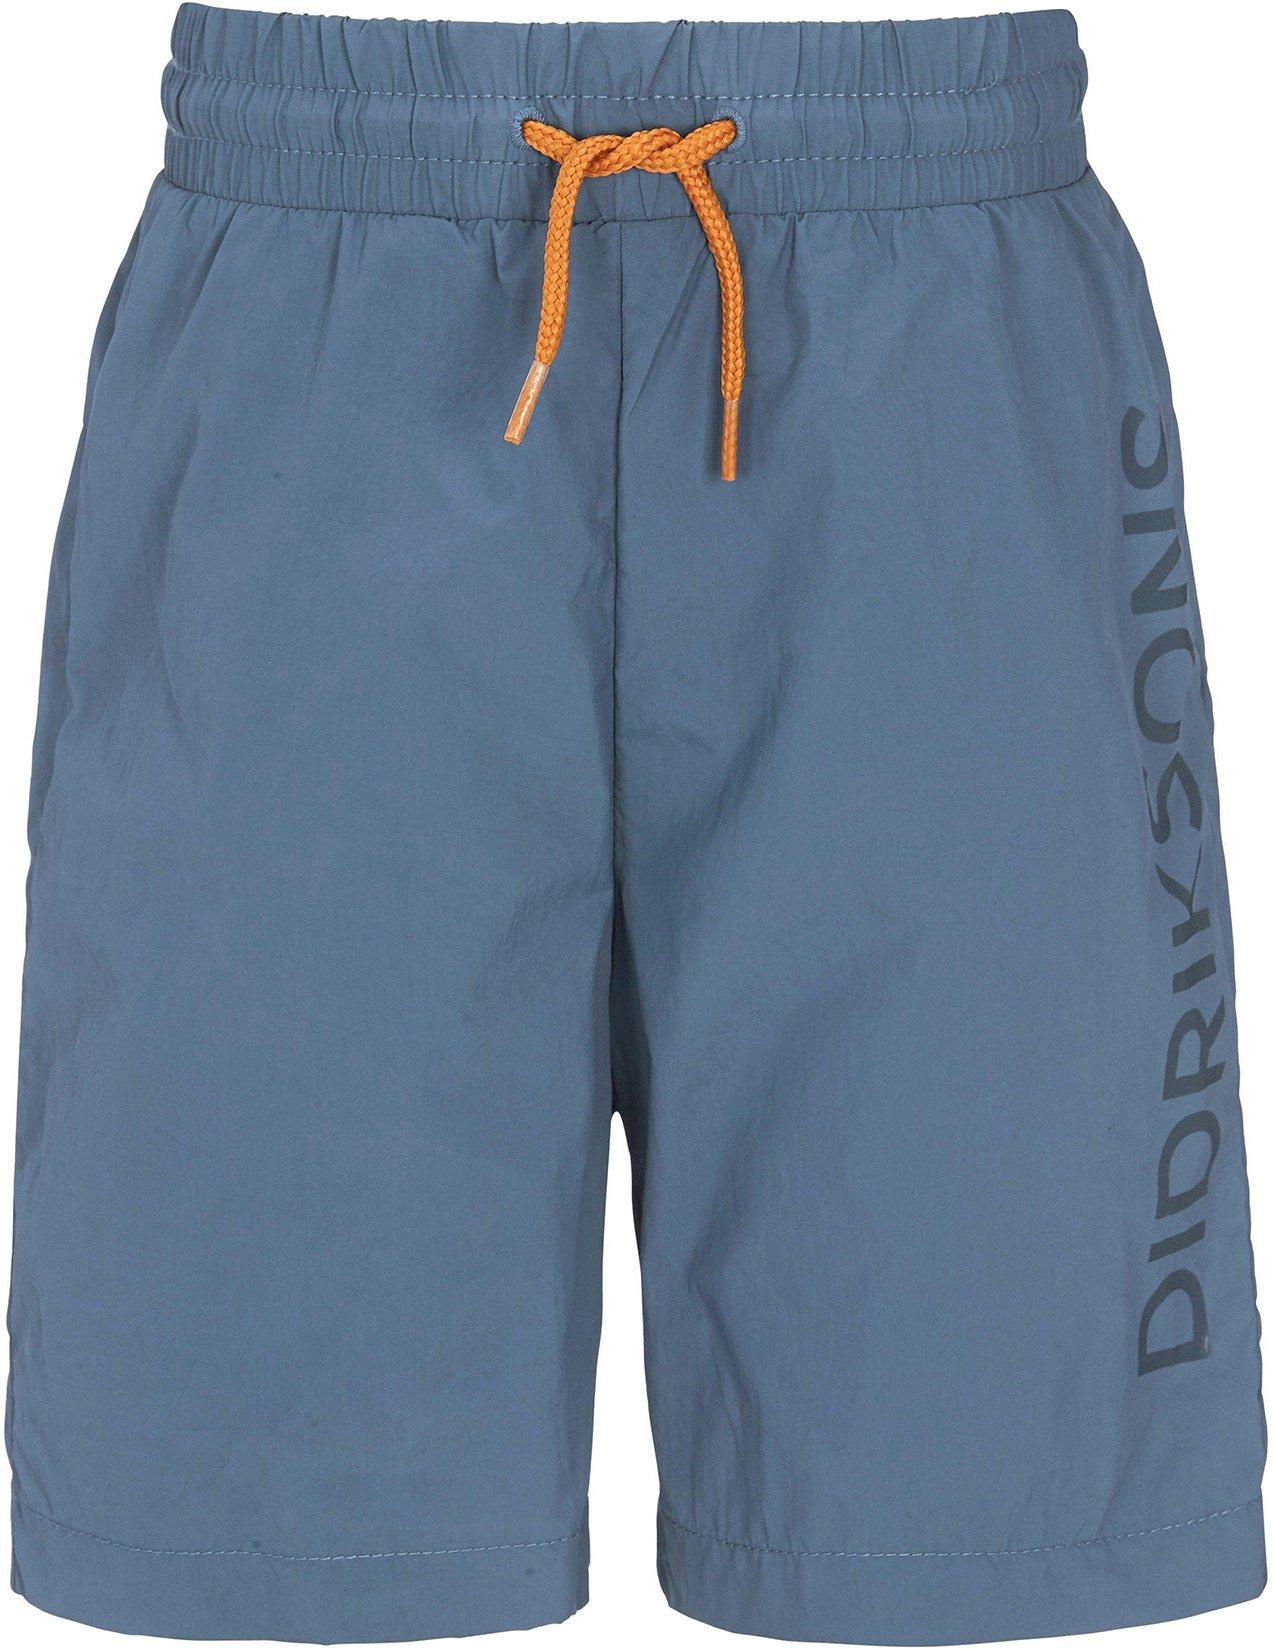 Didriksons Castor Kids' Shorts